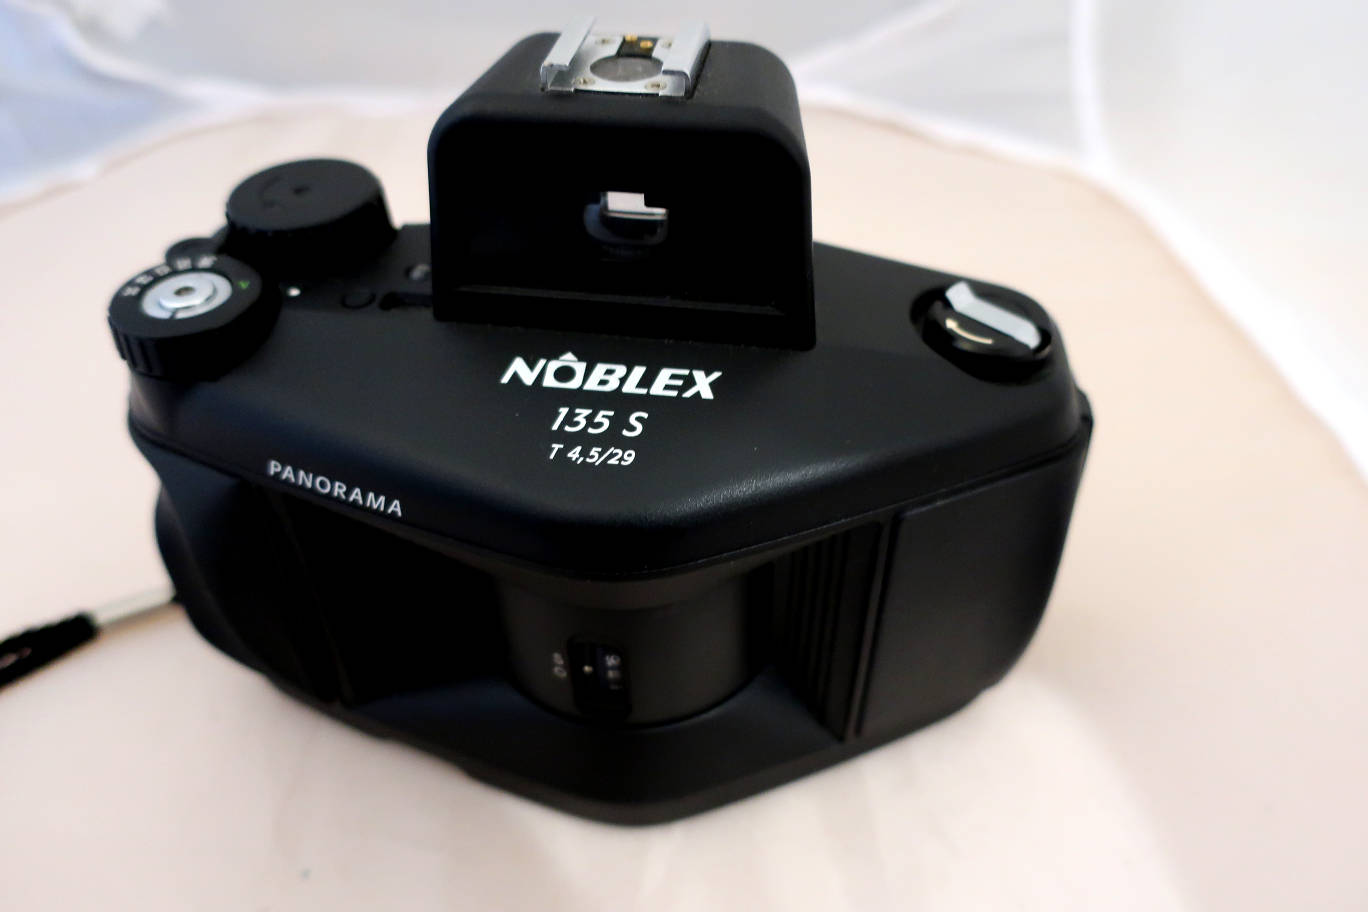 Noblex 135 S